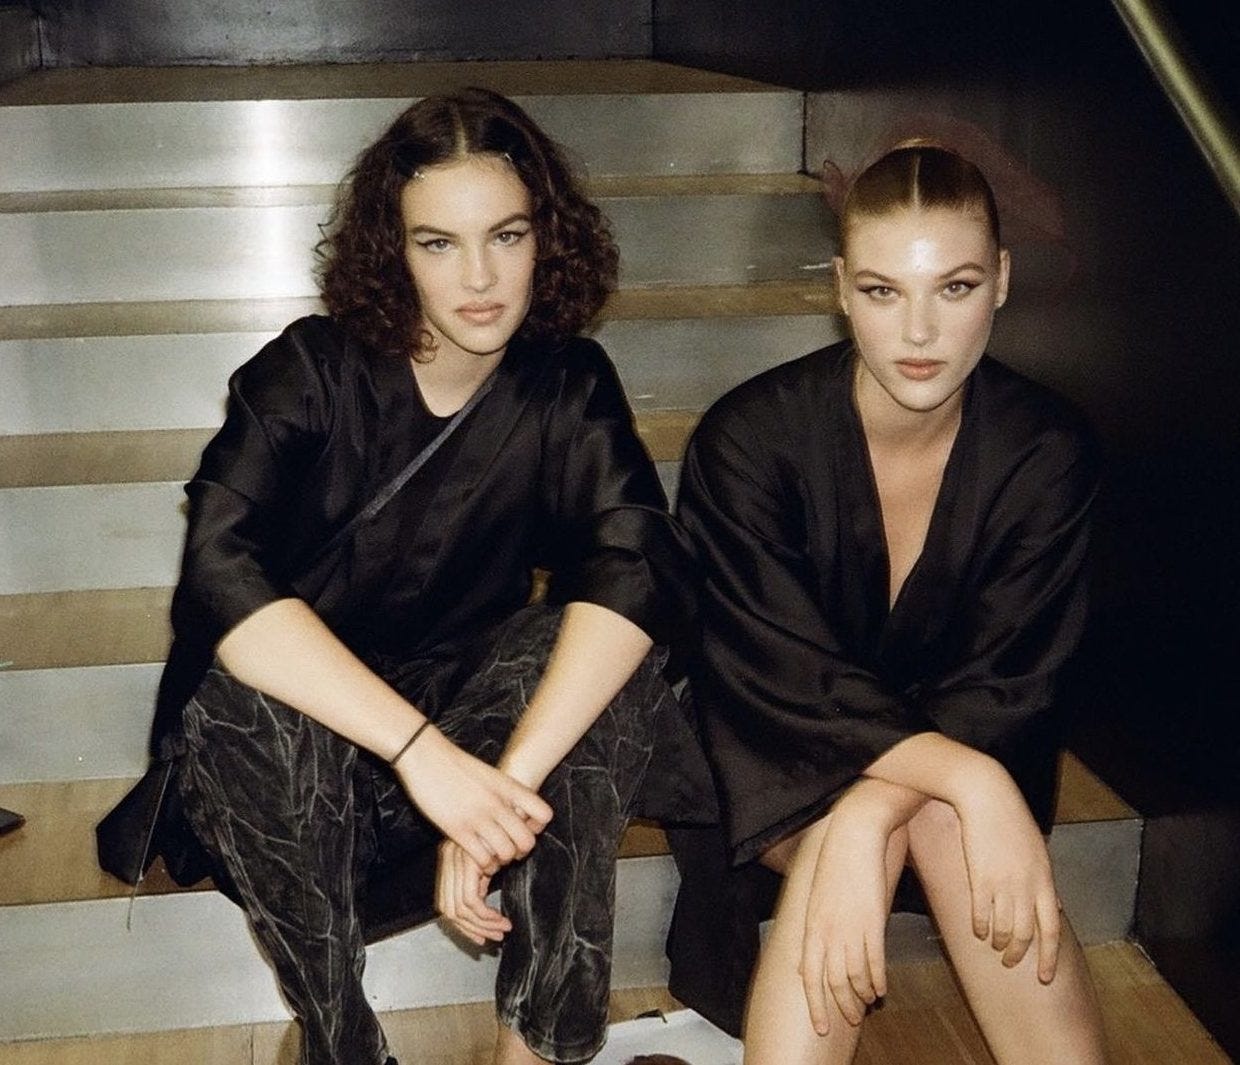 Models Maja Sieroń and Maja Zimnoch sitting on the stairs, backstage at Dolce & Gabbana.